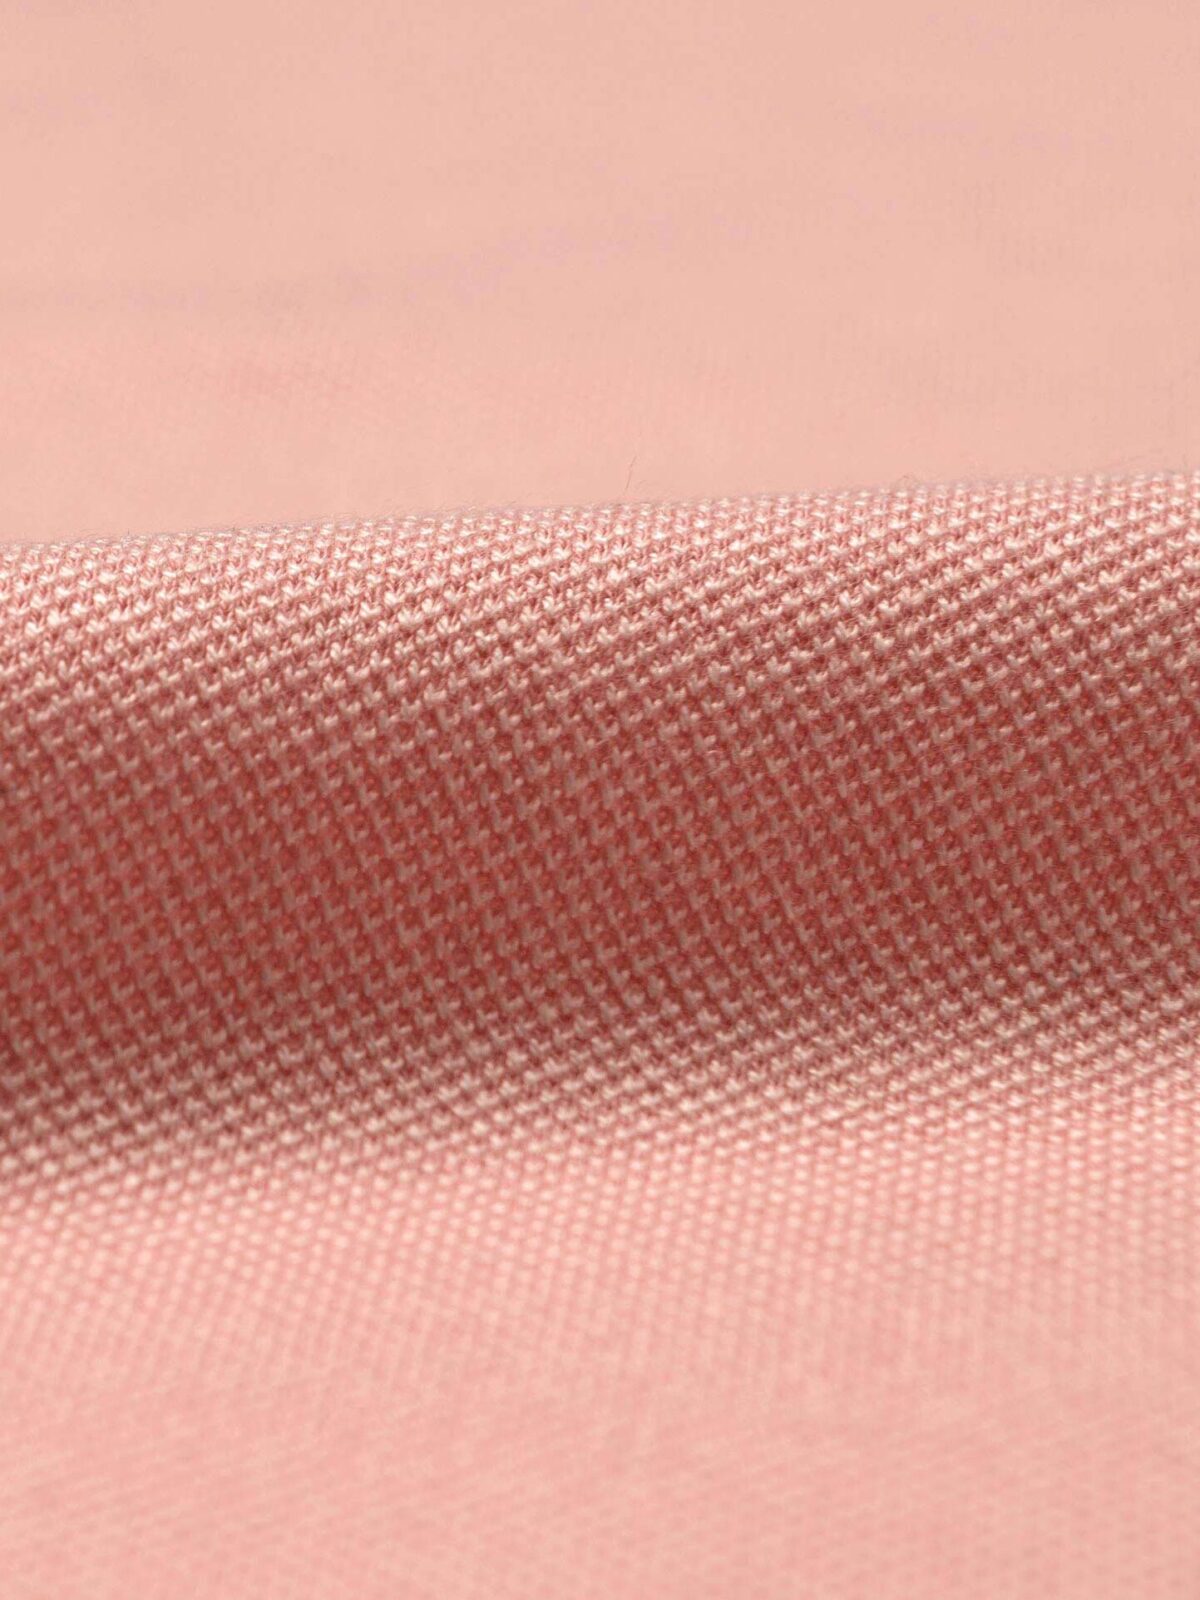 Tencel Carmel Knit Cotton Cloth by Pique Proper Peach Shirts and